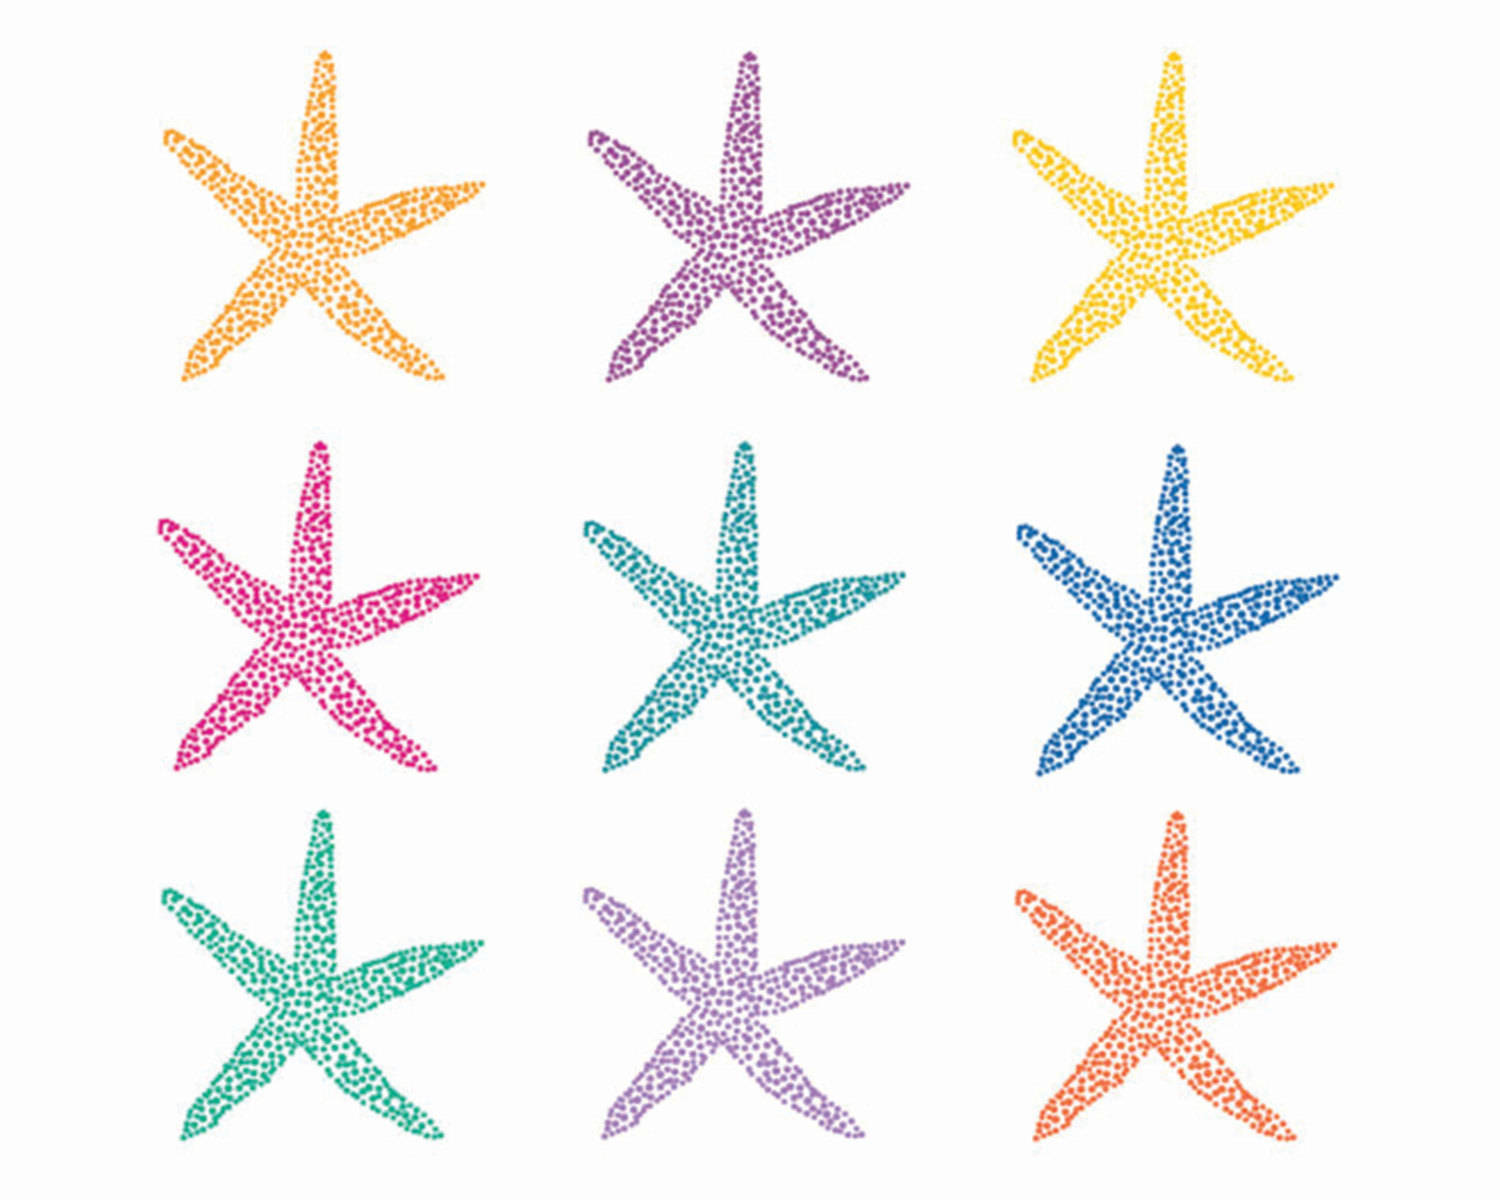 Starfish clip art | Etsy